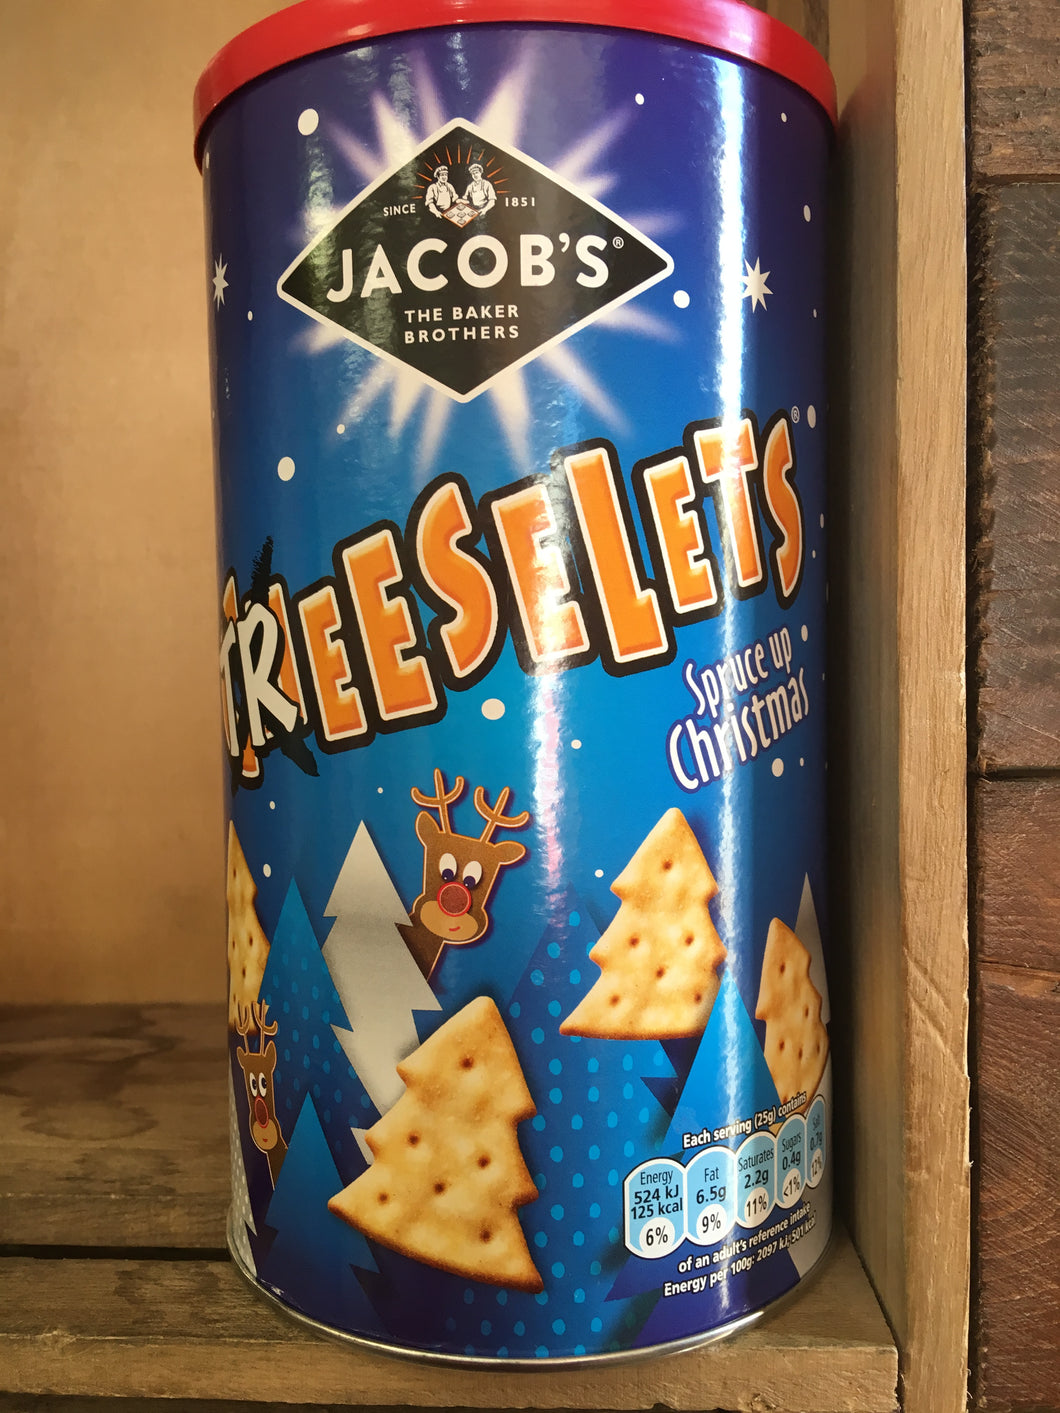 Jacobs Cheeselets (Treeselets) 280g